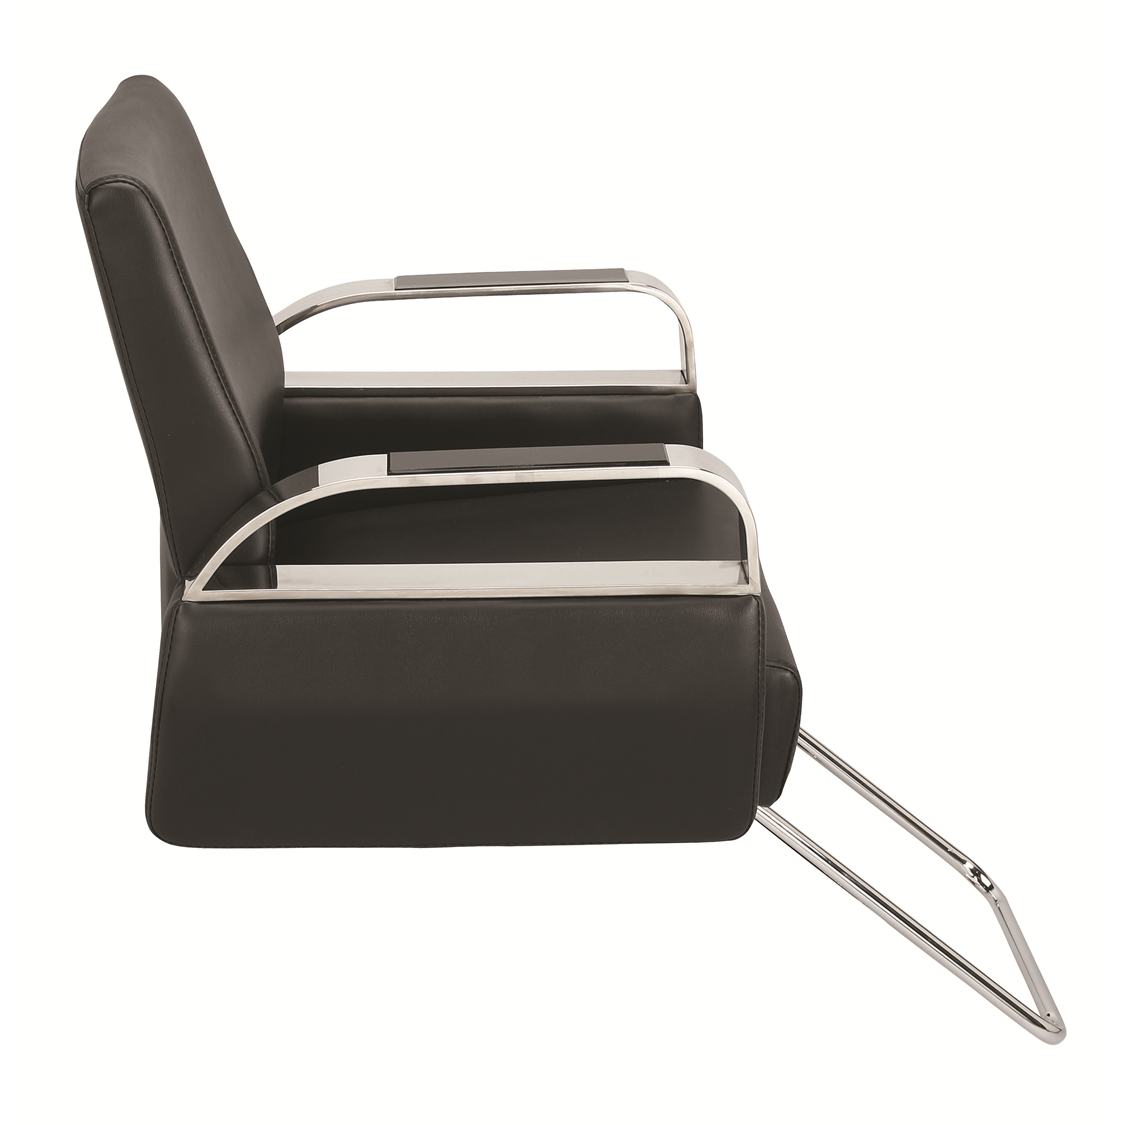 Simo Salon Styling Chair - Garfield Commercial Enterprises Salon Equipment Spa Furniture Barber Chair Luxury